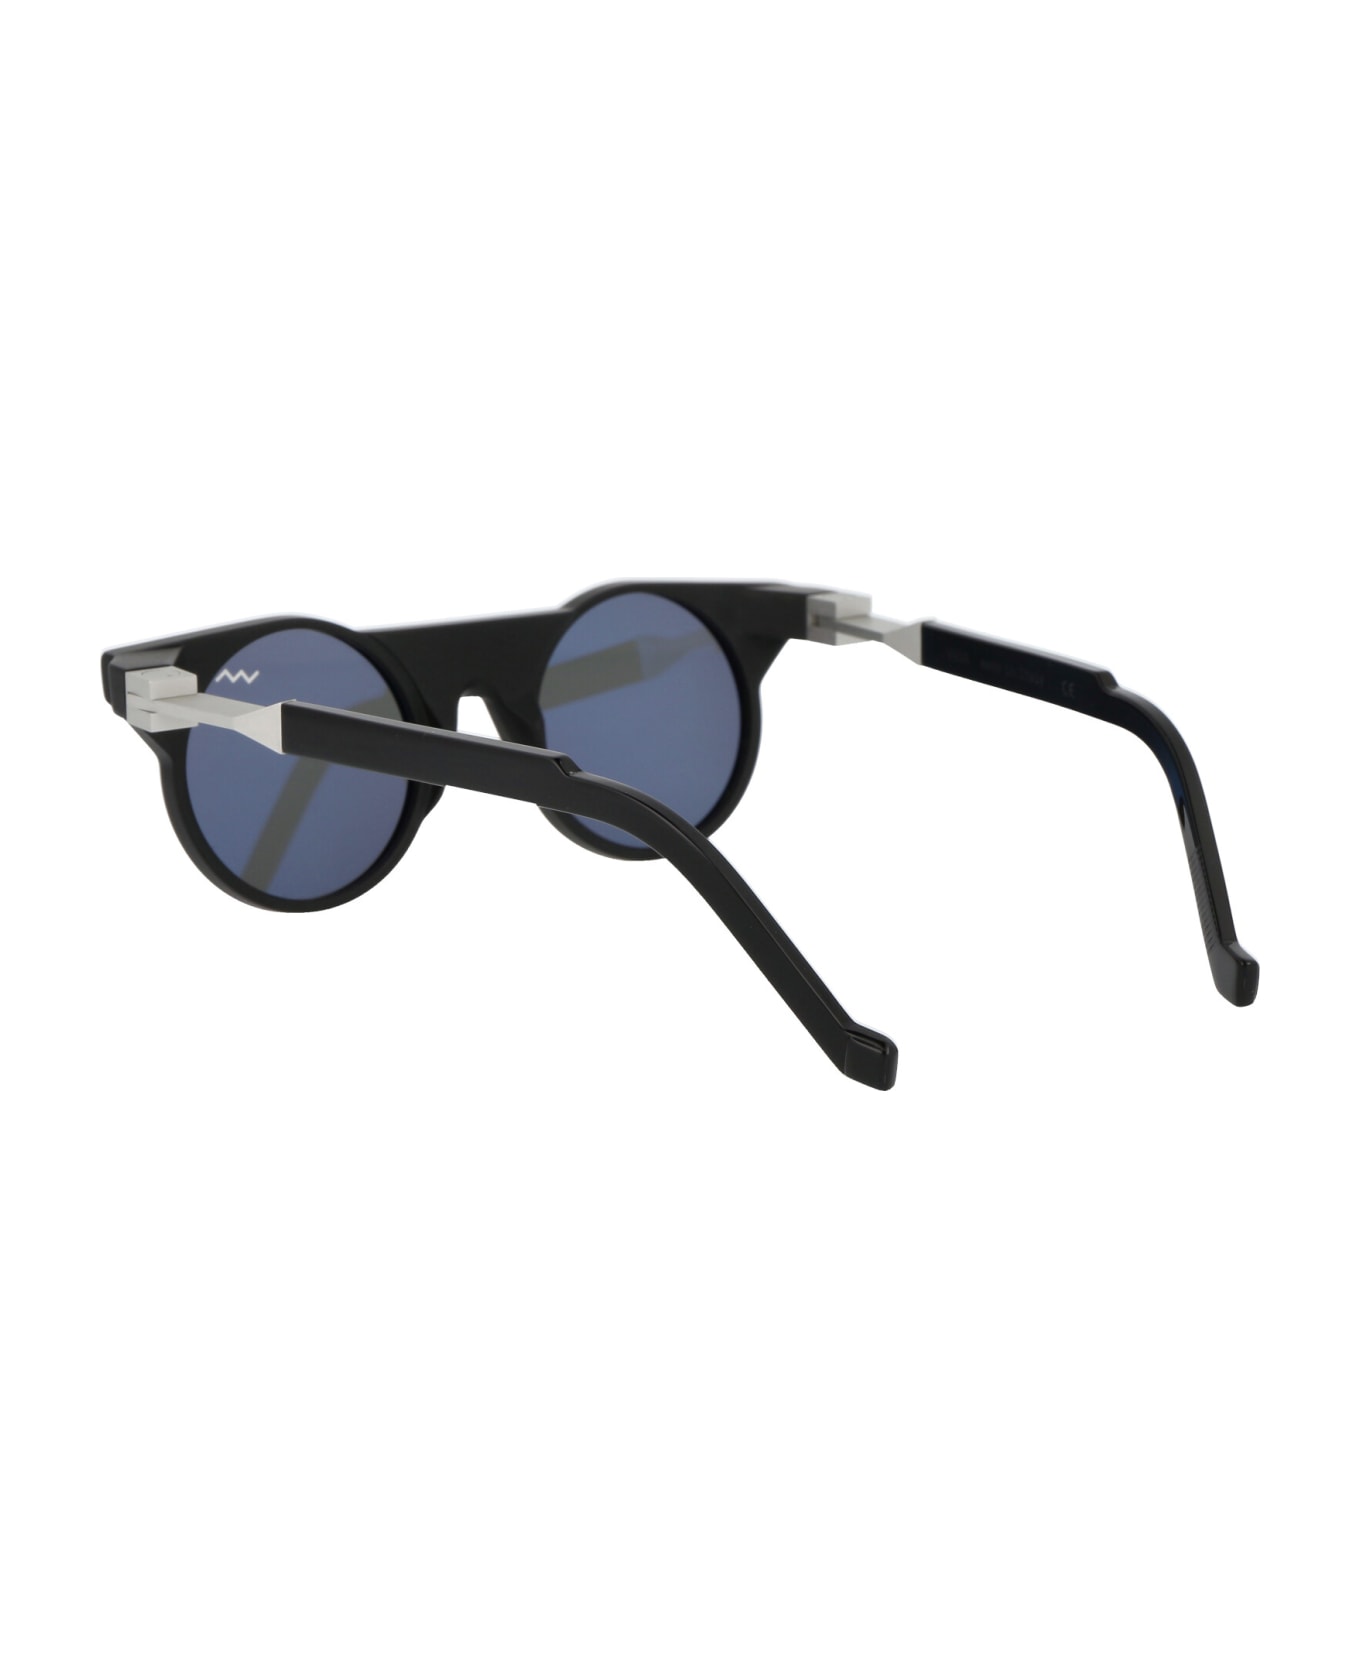 VAVA Bl0013 Sunglasses - BLACK SILVER LEX HINGES BLACK LENSES EURO サングラス